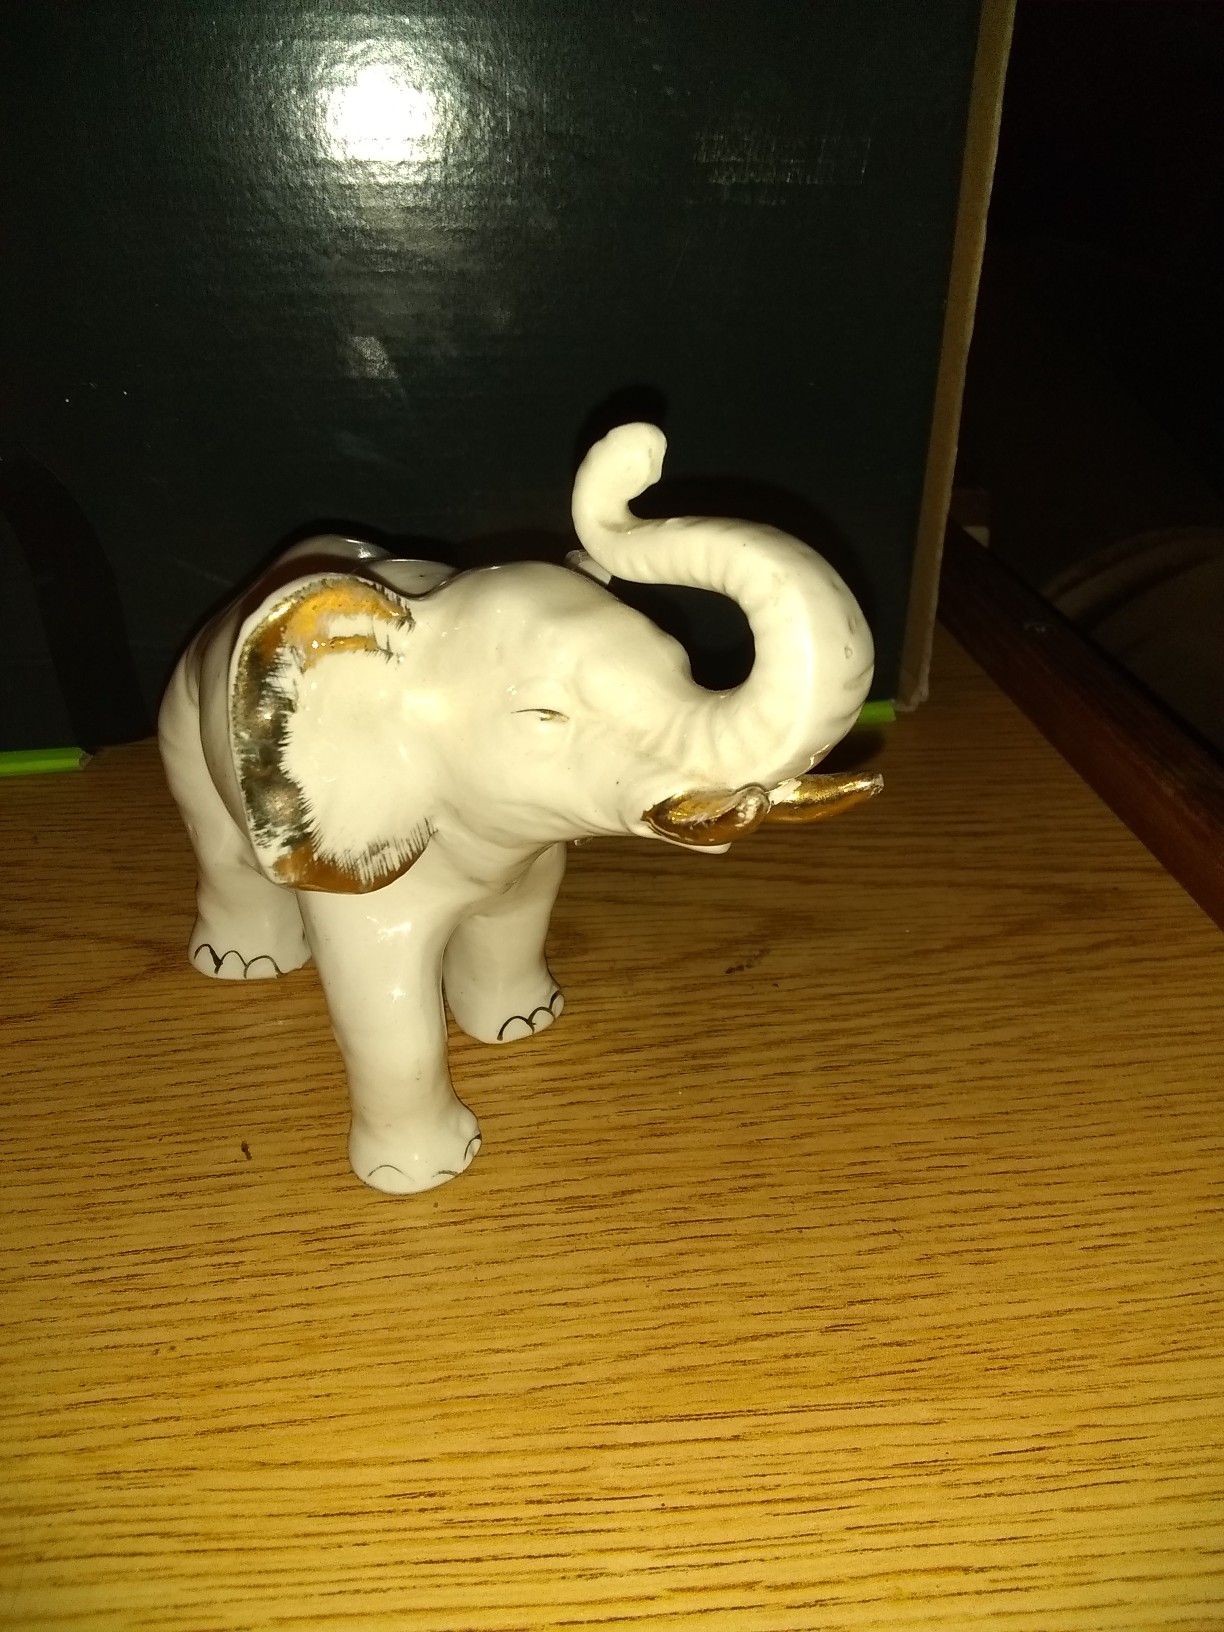 Mid 1950's white porcelain elephant